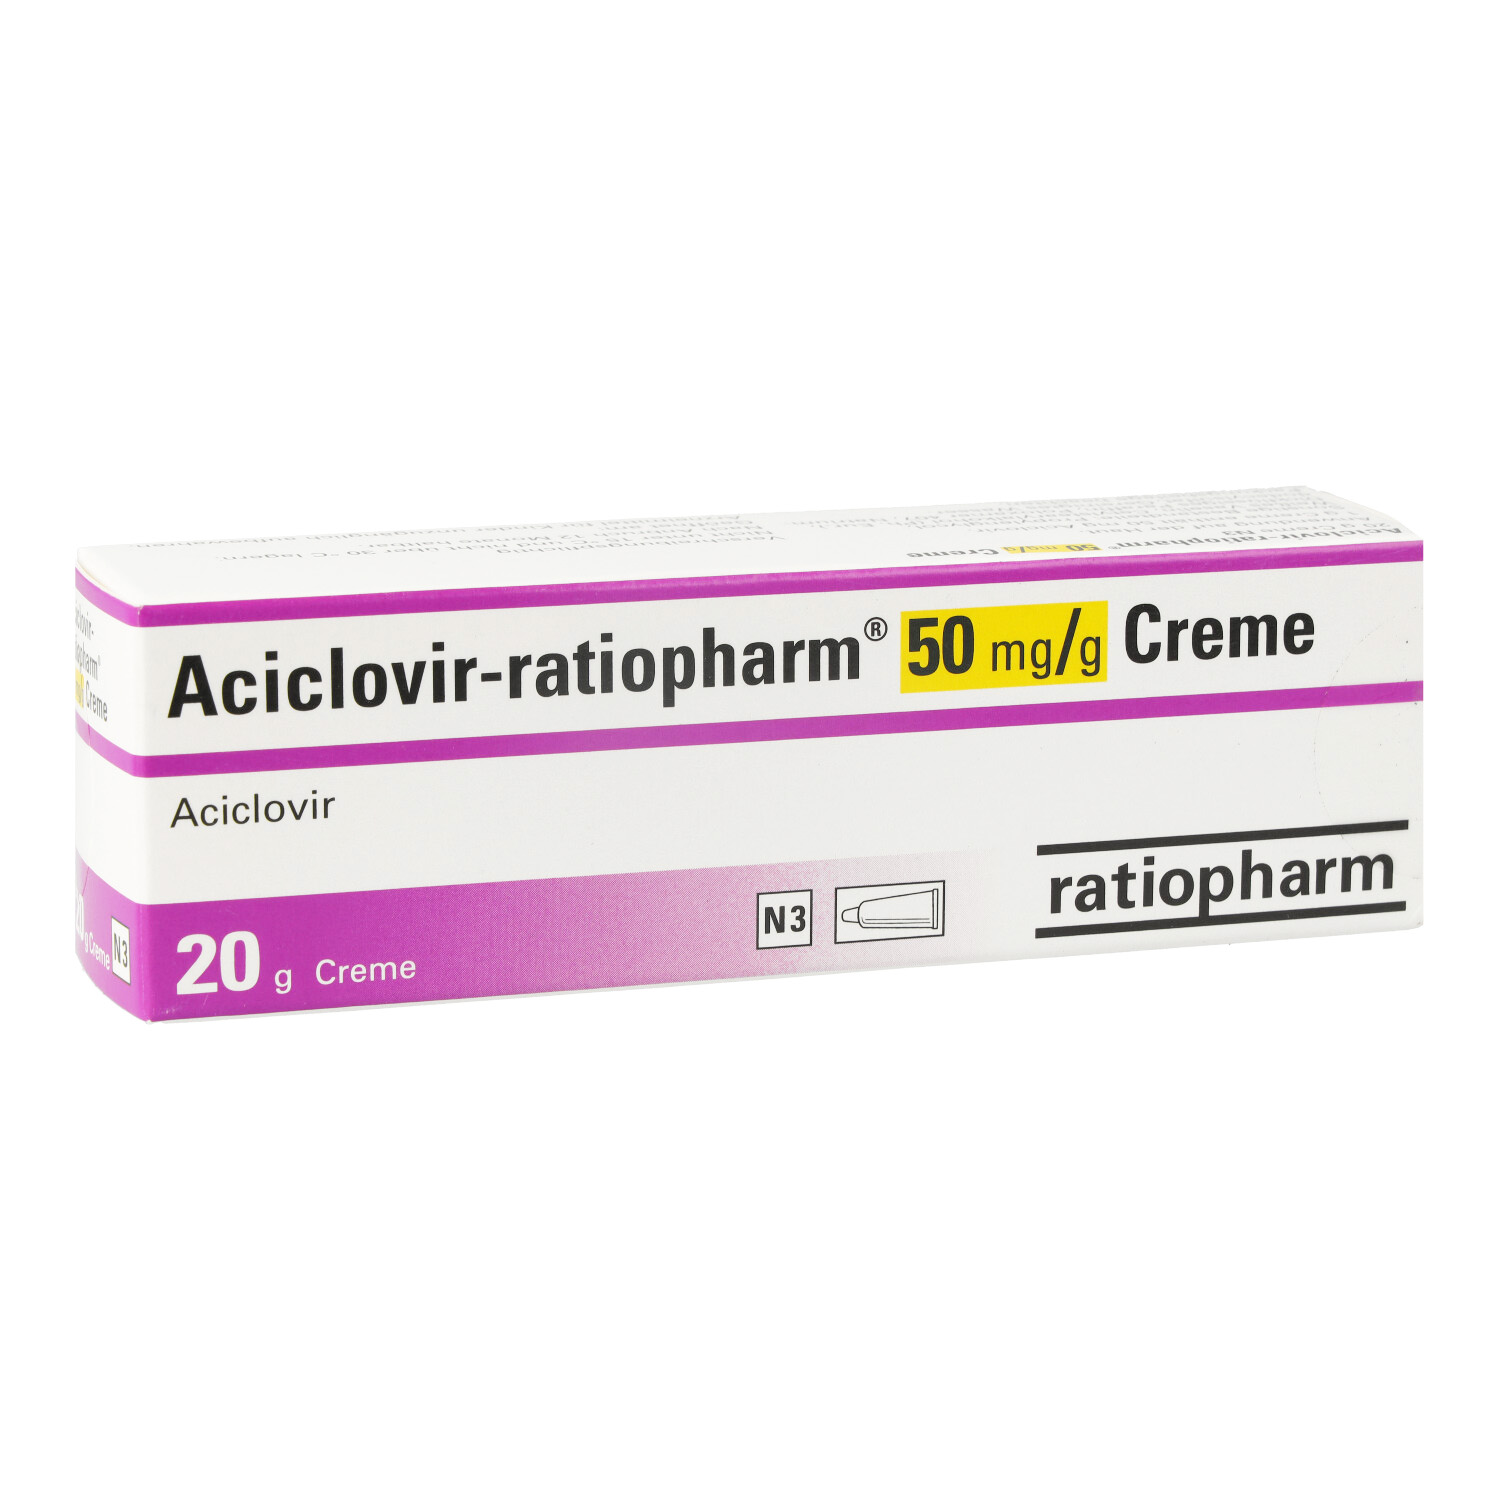 ACICLOVIR-ratiopharm 50 mg/g Creme